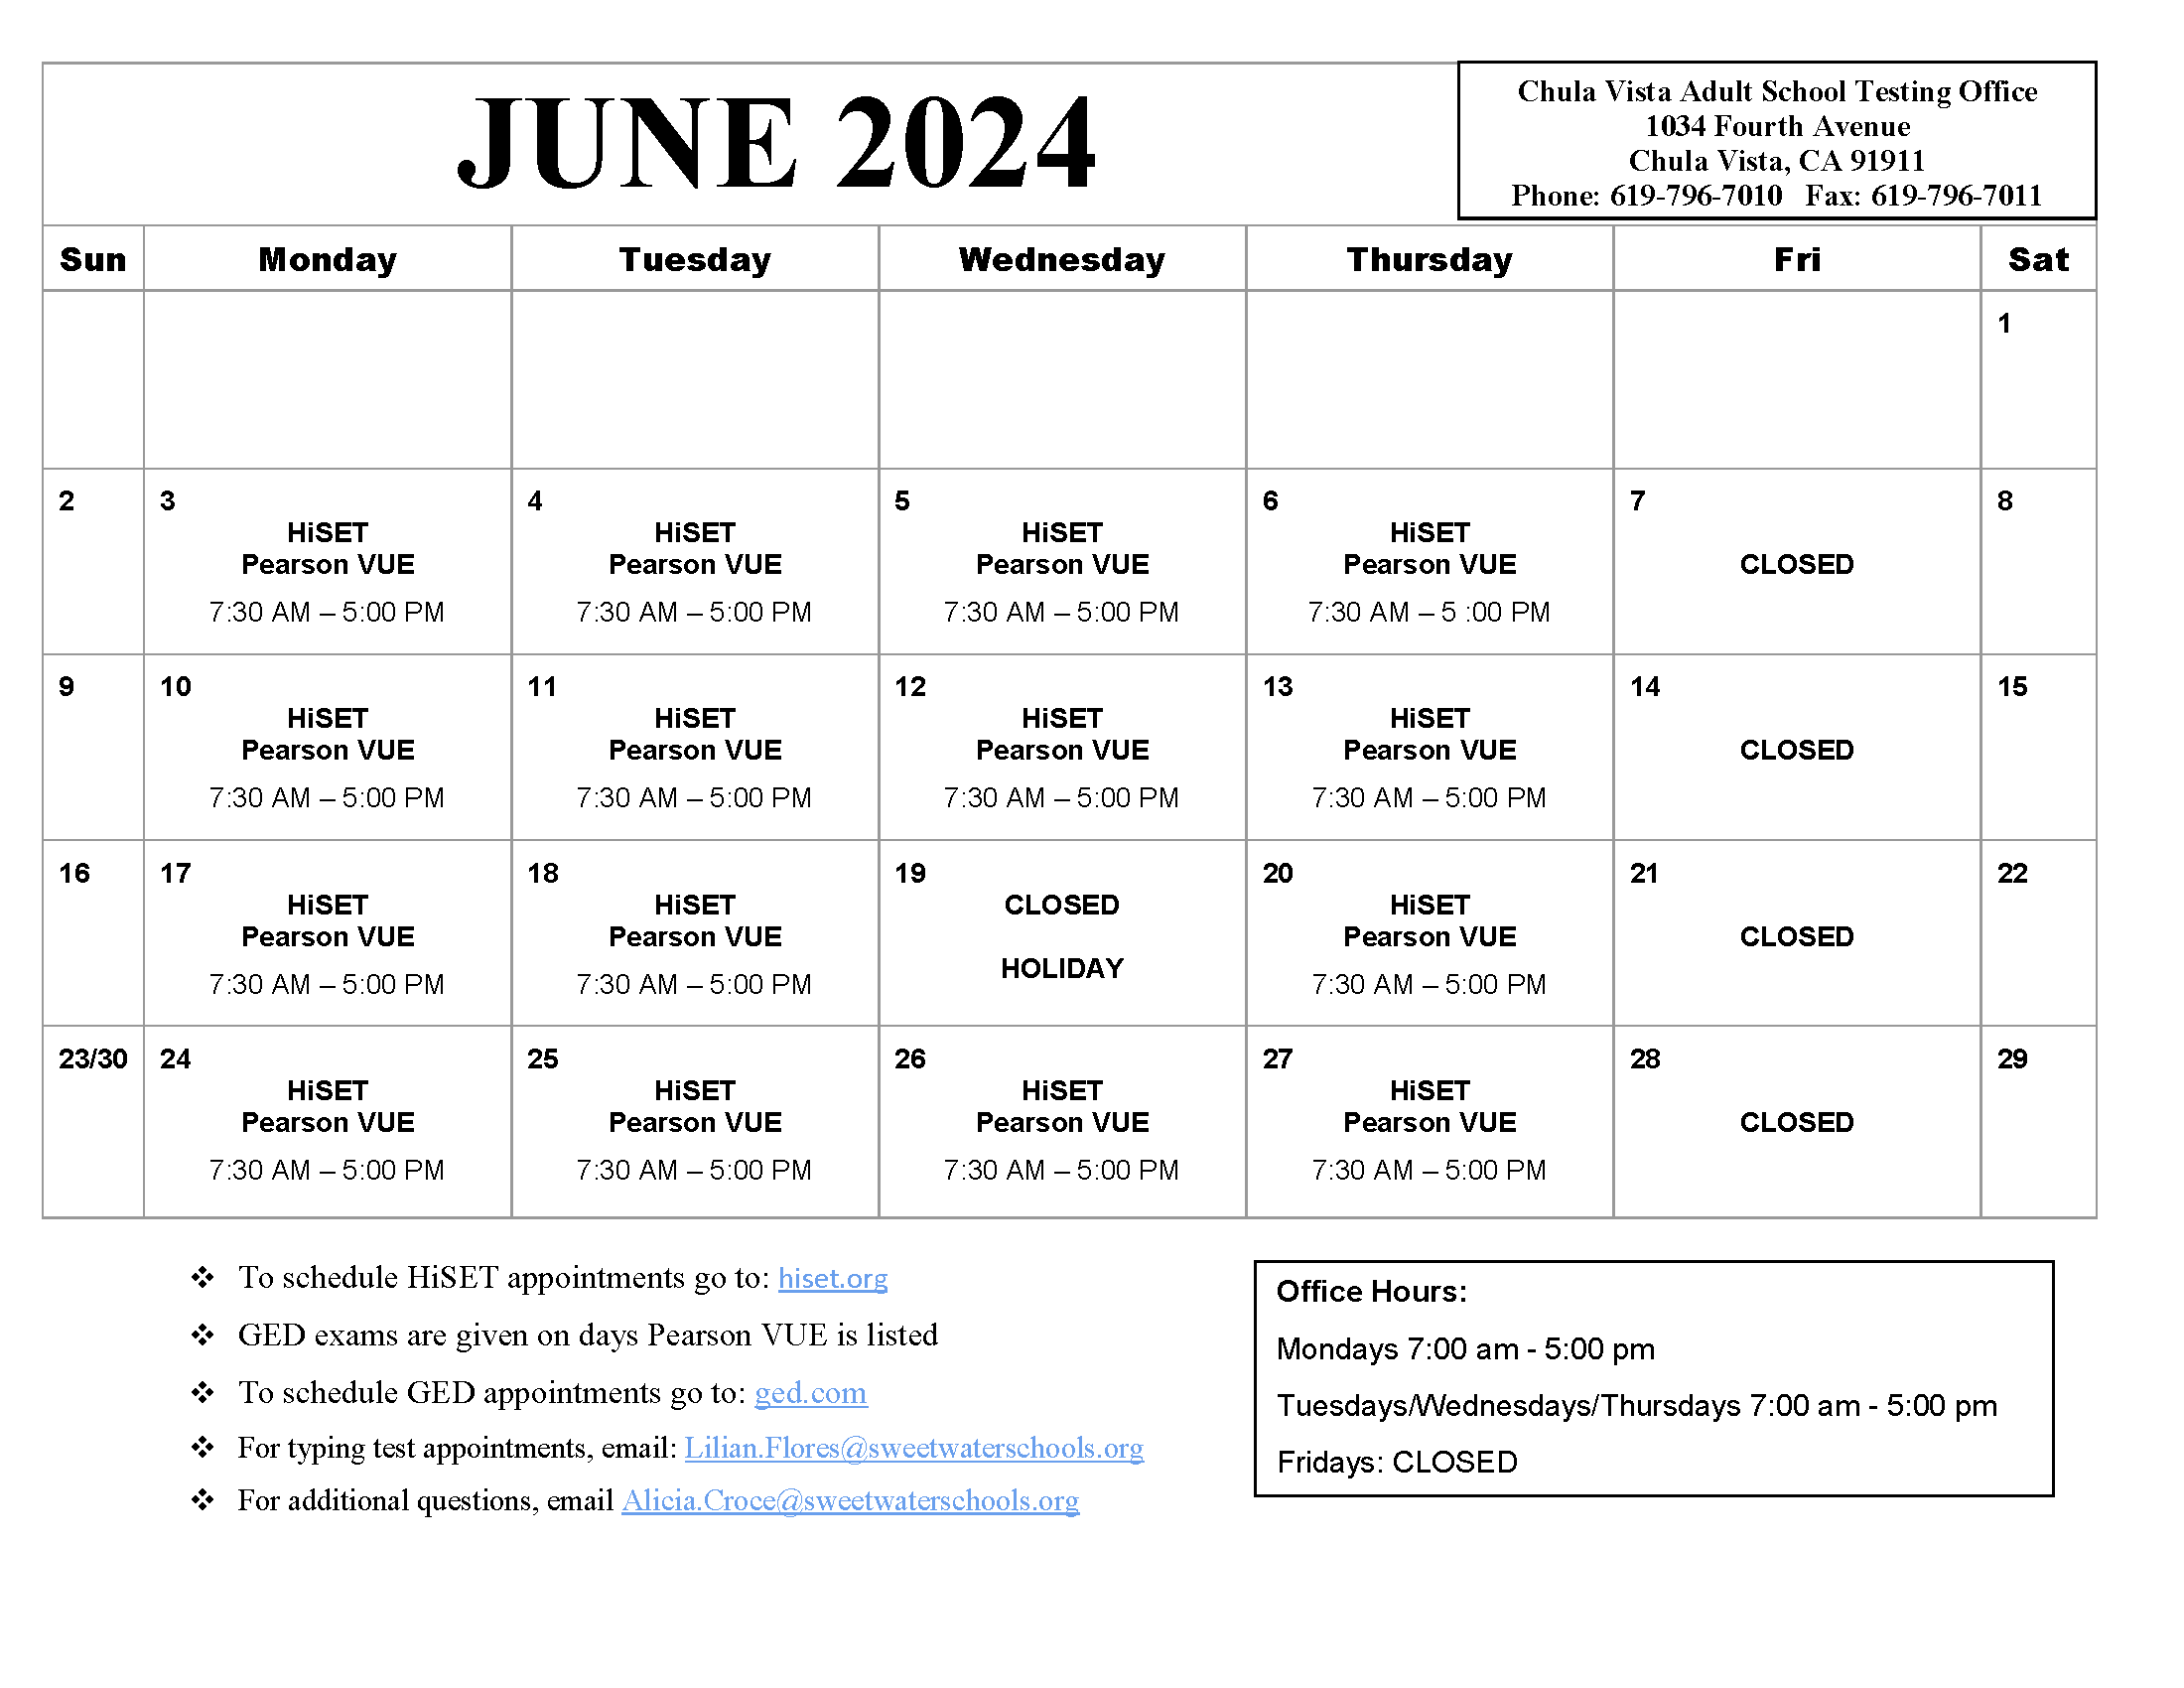 June 2024 Testing Calendar for the Chula Vista Testing Center.